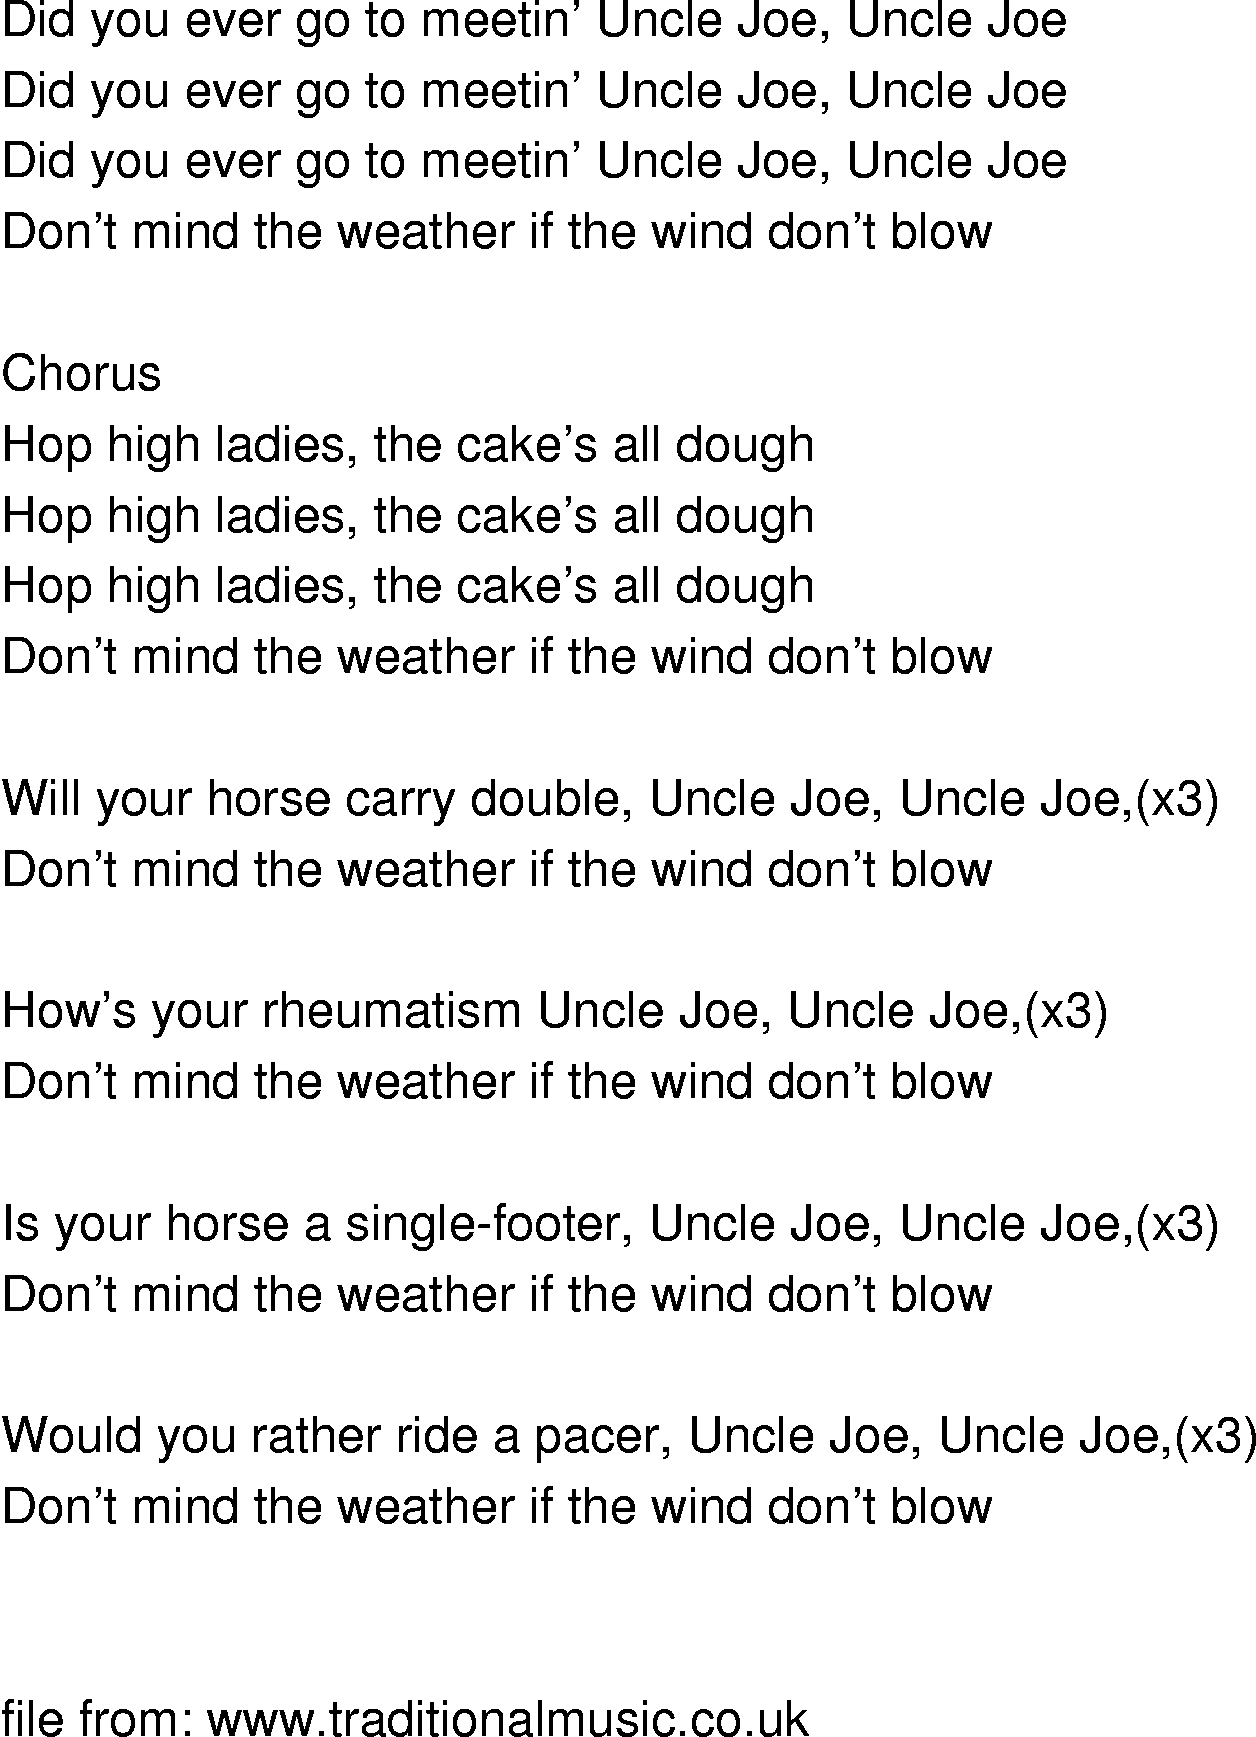 Old-Time (oldtimey) Song Lyrics - uncle joe